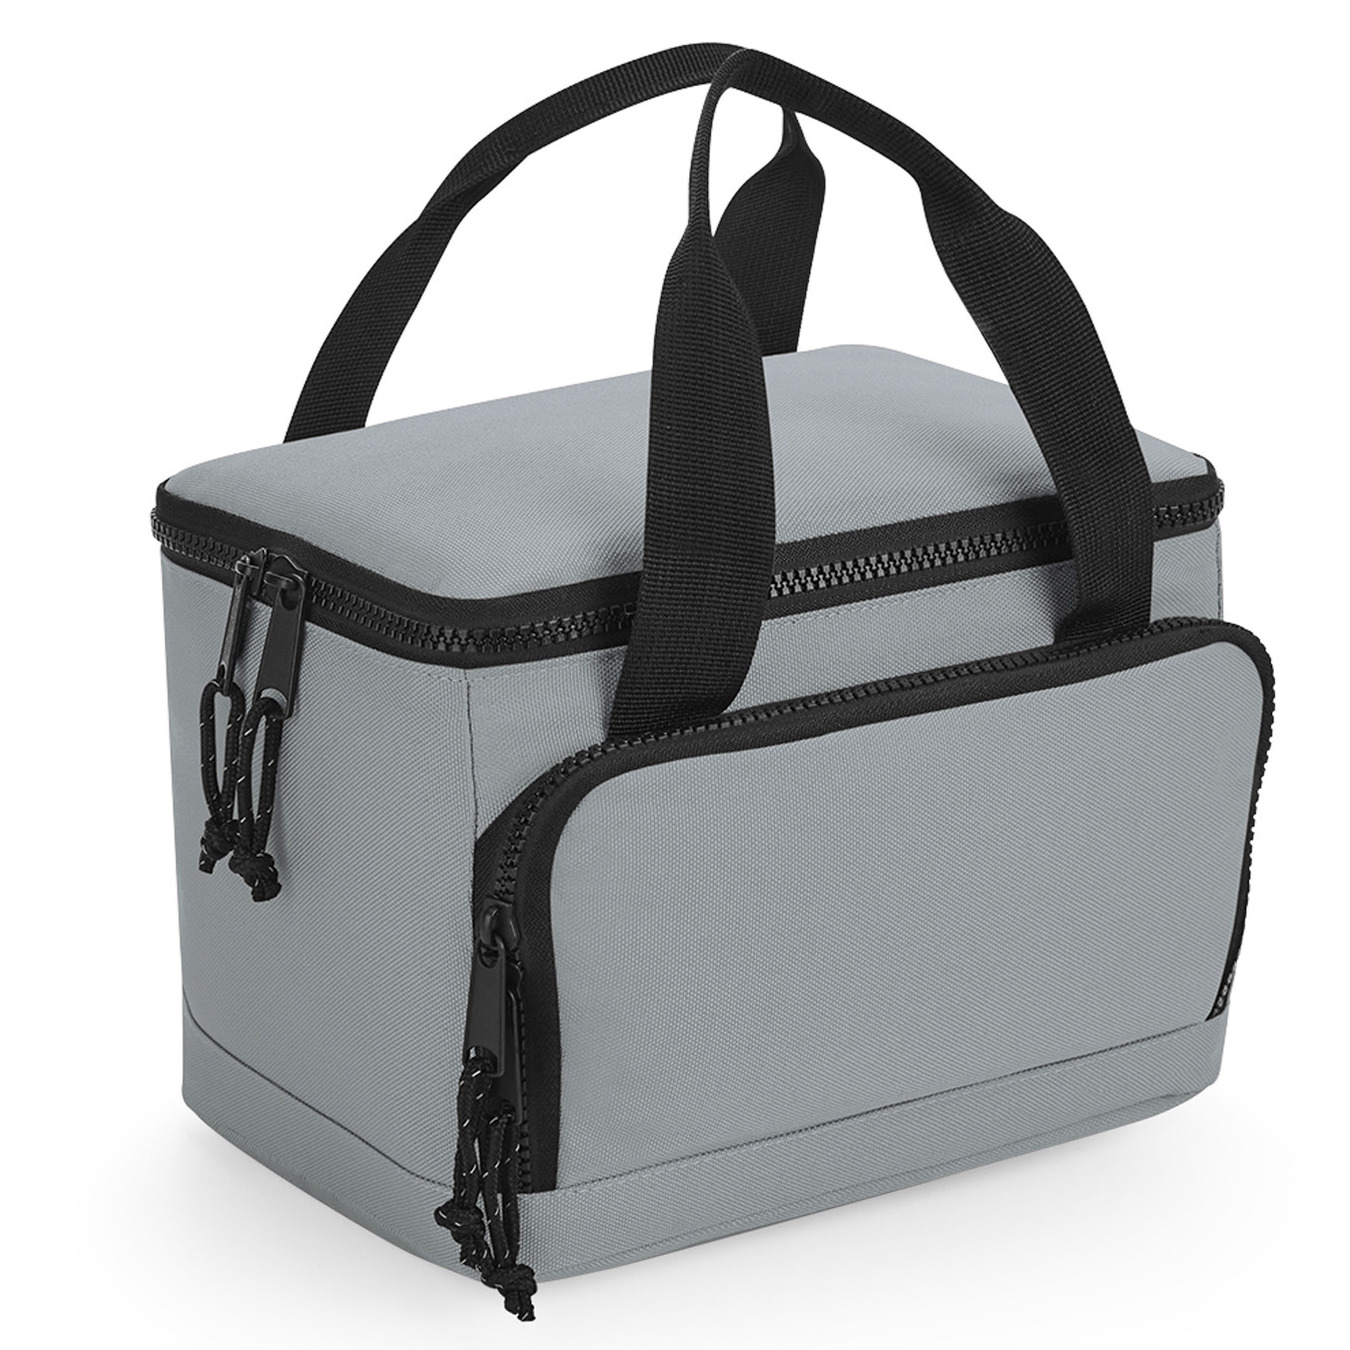 Bagbase koeltasje-lunch tas model Compact 24 x 17 x 17 cm 2 vakken grijs-zwart klein model